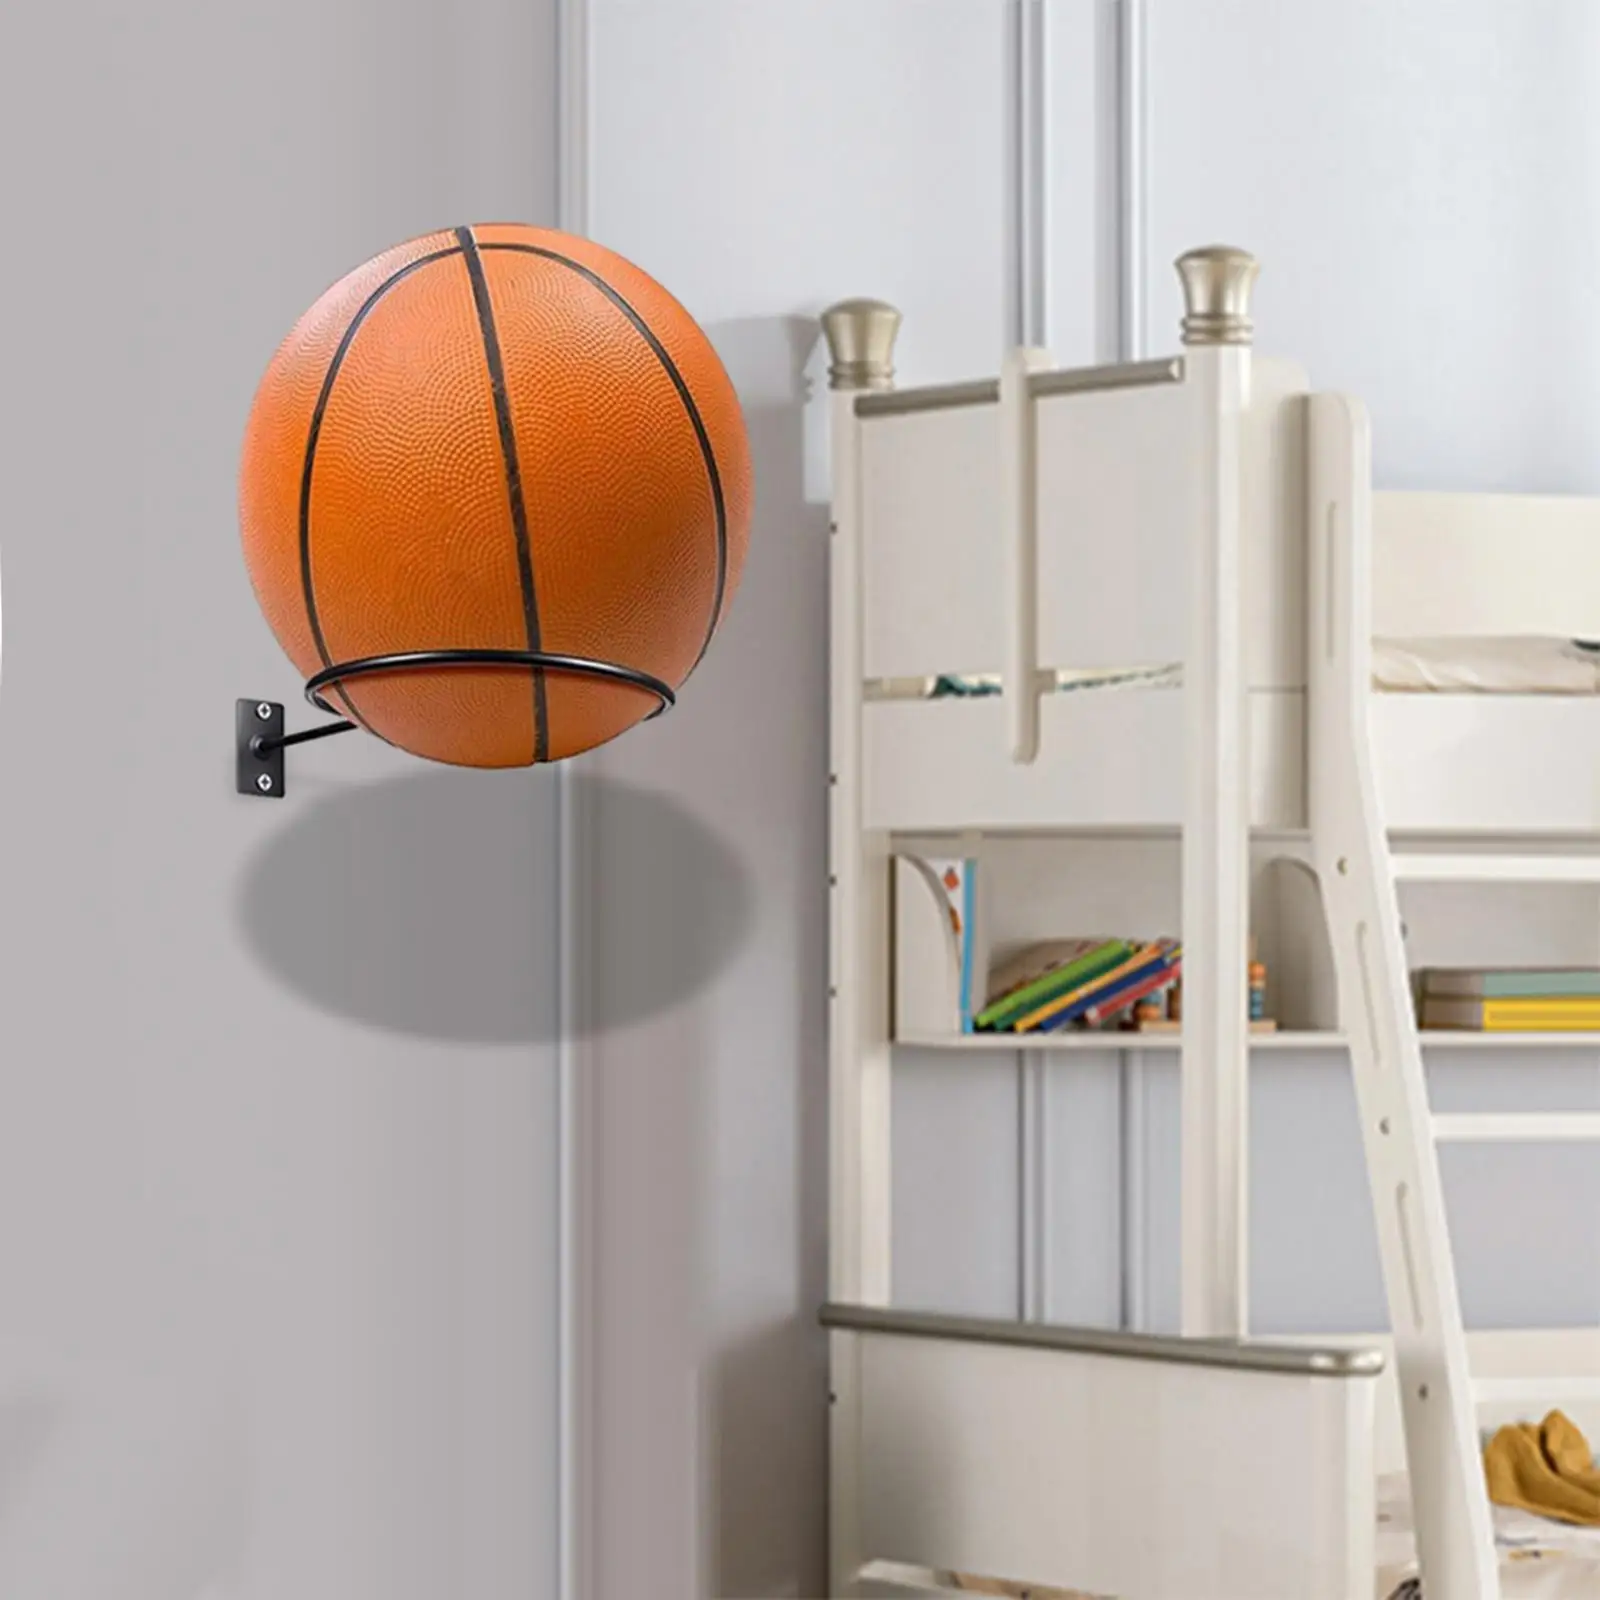 Sports Ball Holder Organizer Multifunctional Wall Mounted Ball Storage Rack for Soccer Volleyball Football Basketball Equipment